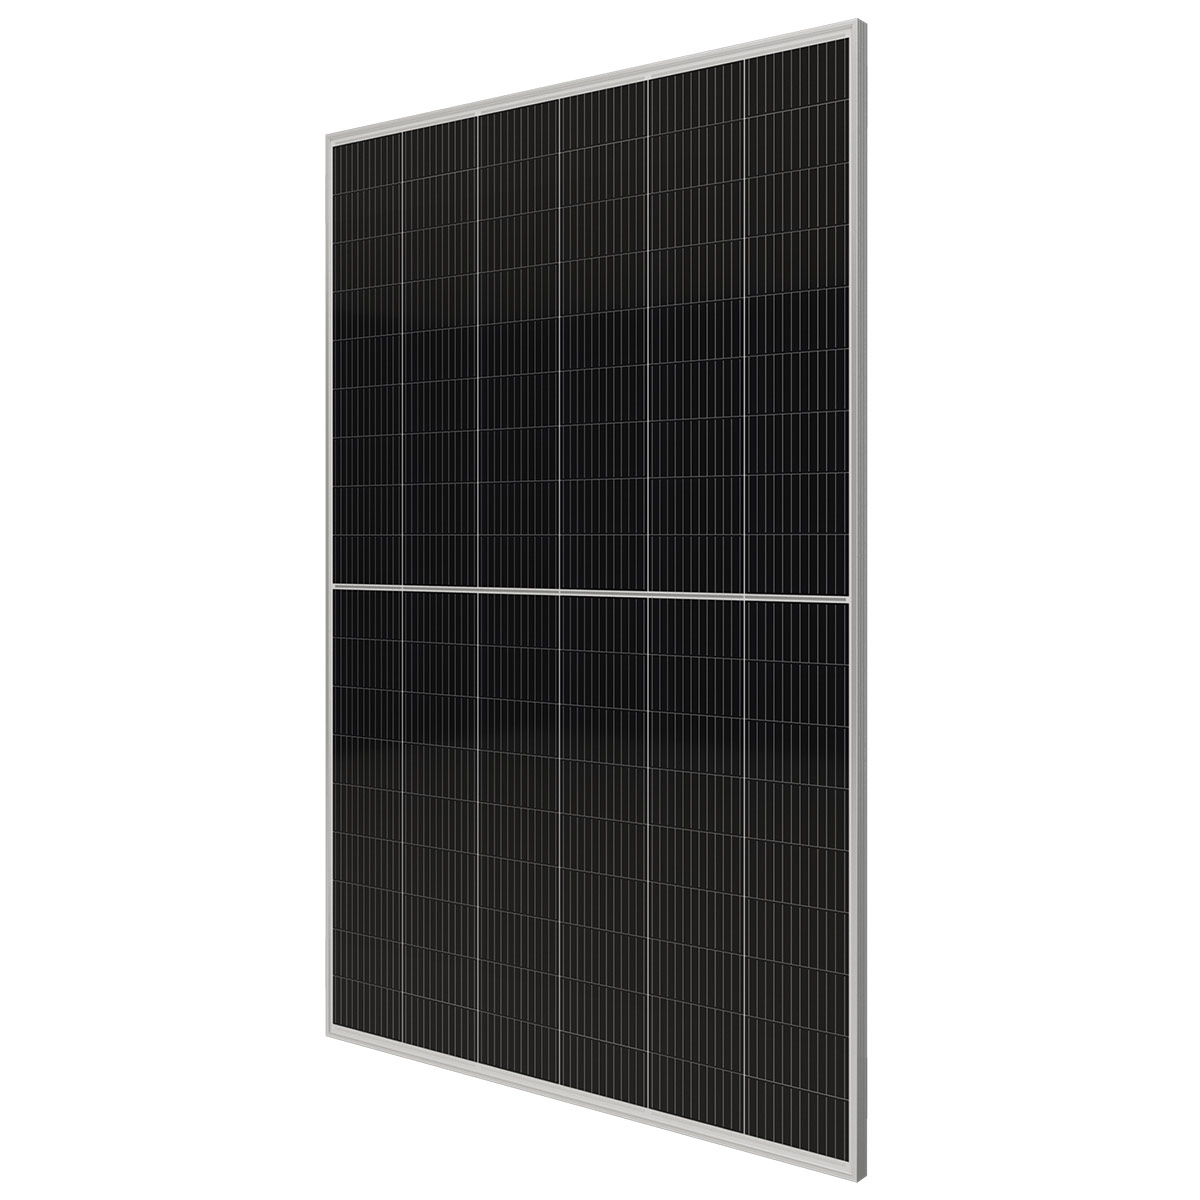 TommaTech 530Wp 108PM M12 HC-MB Solar Panel